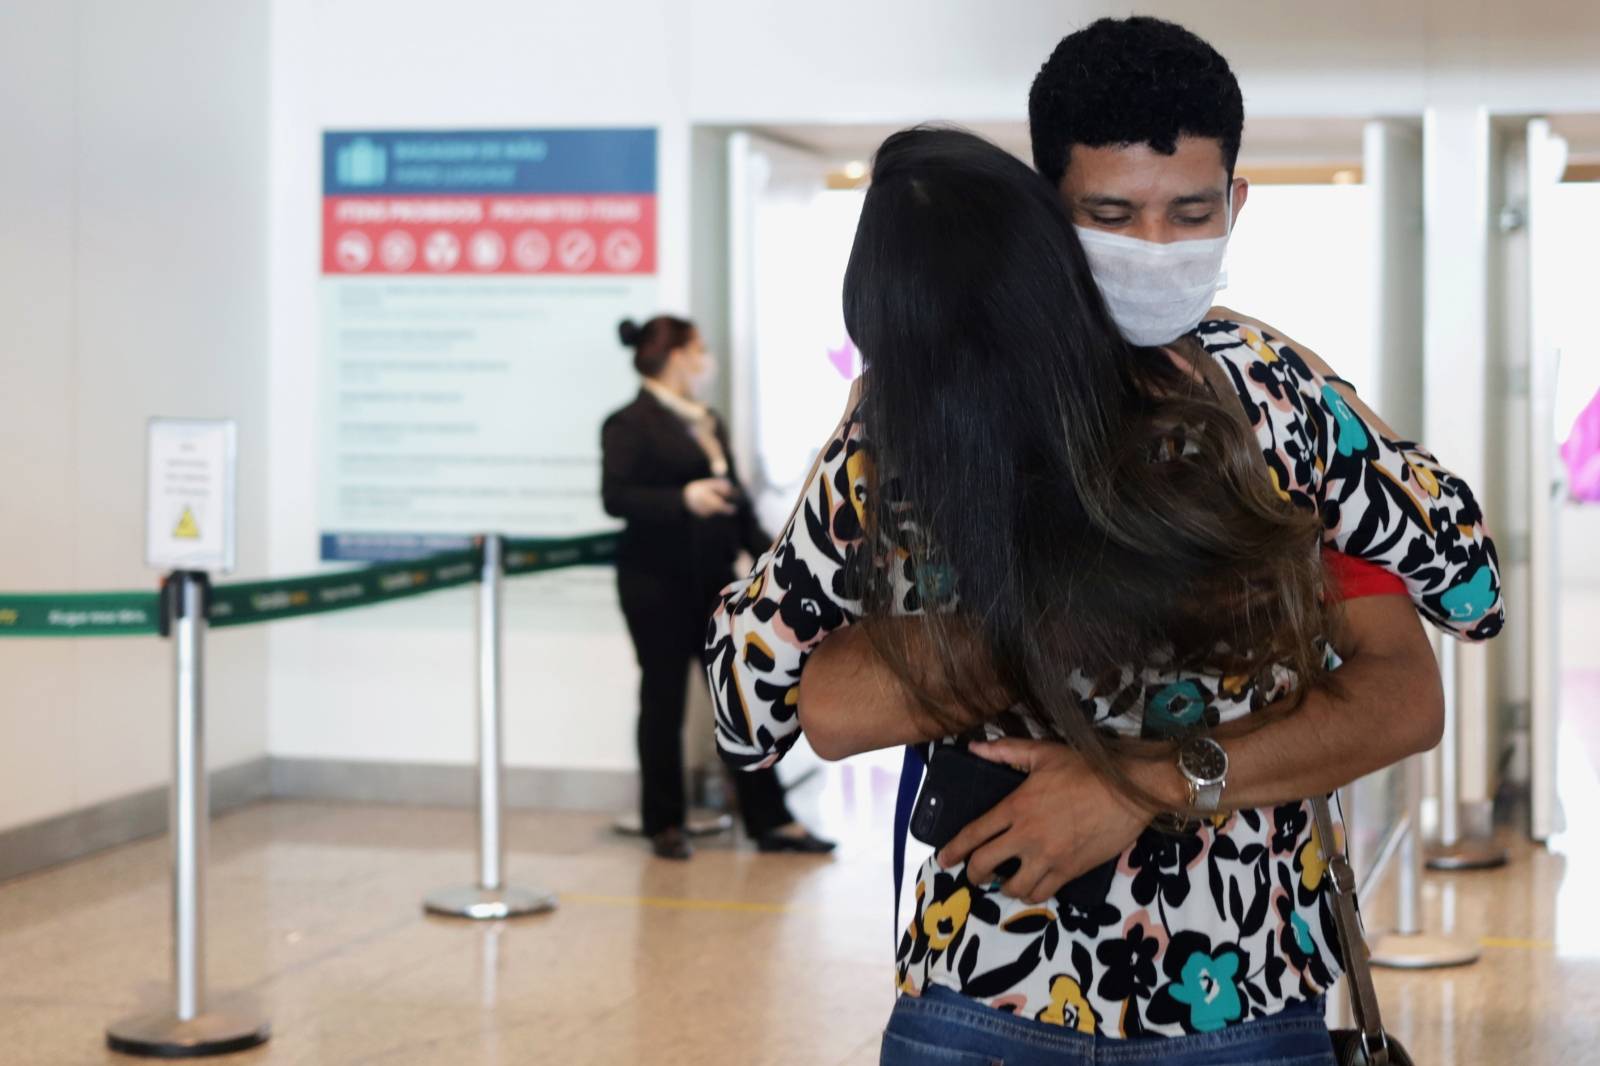 A man wearing a face mask hugs a woman amid the coronavirus disease (COVID-19) at Viracopos International Airport, in Campinas